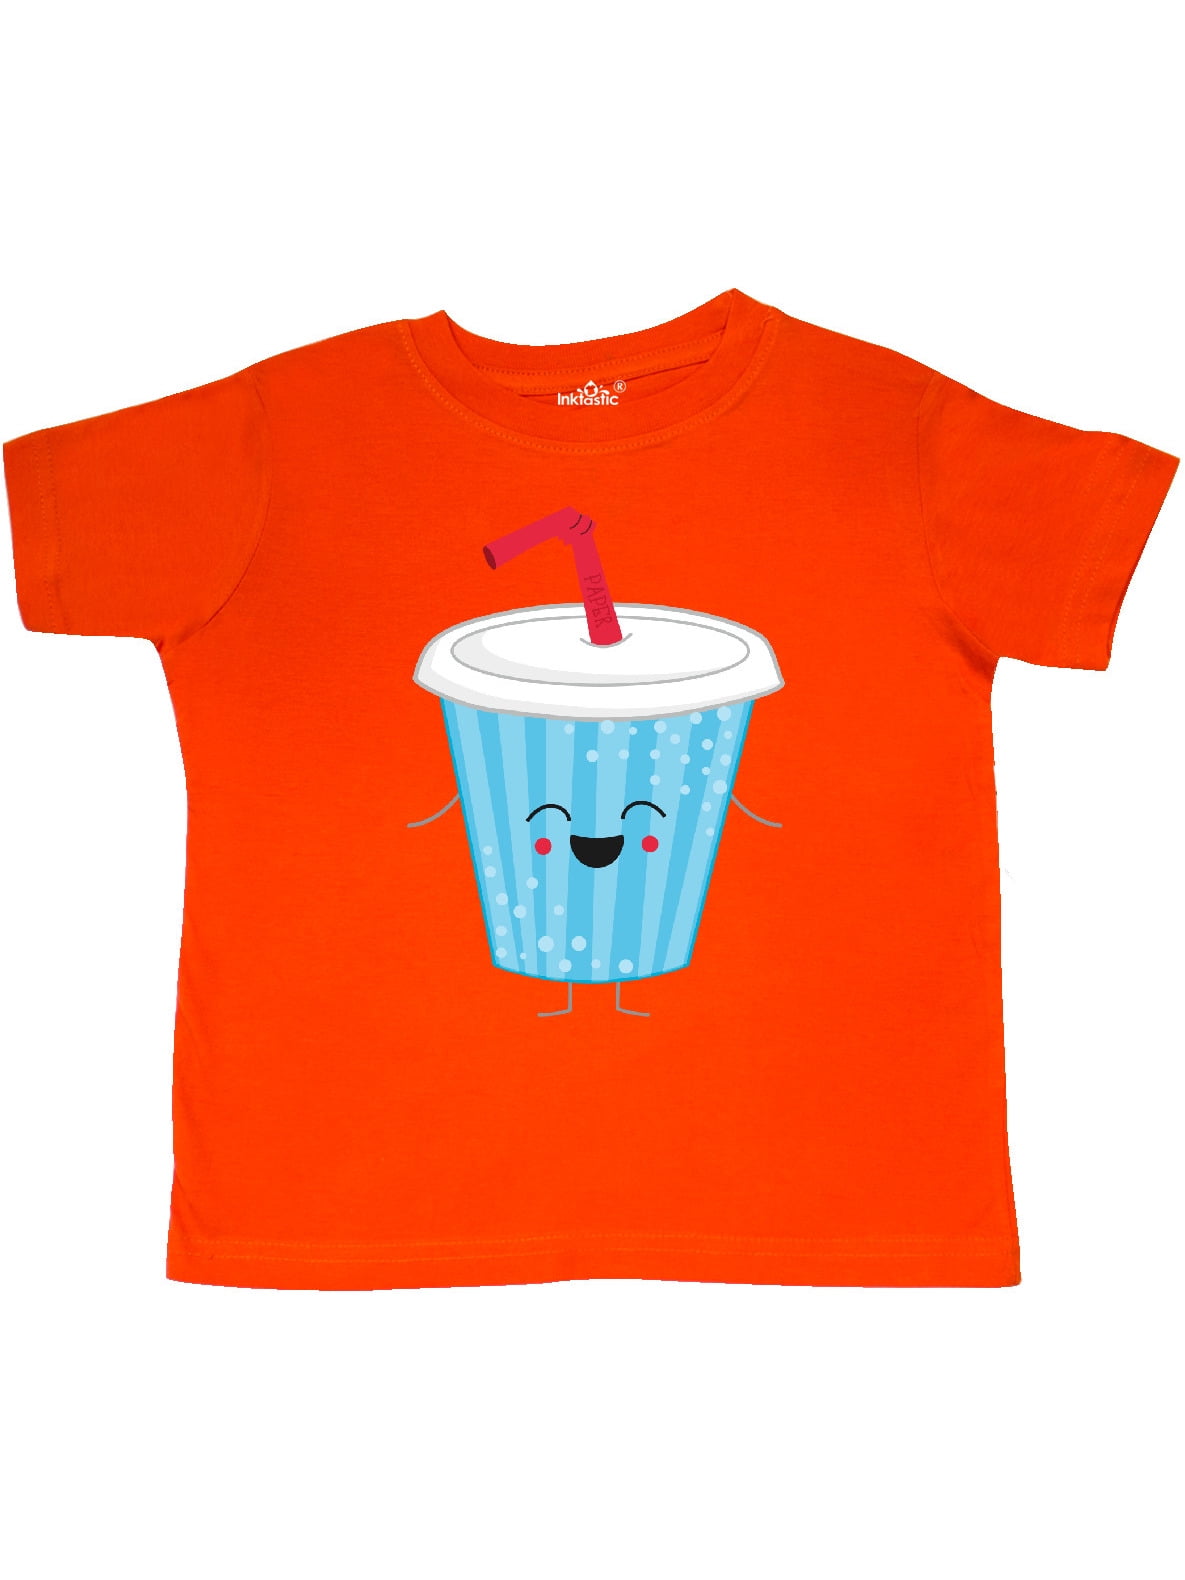 INKtastic - Soda Pop Costume Toddler T-Shirt - Walmart.com - Walmart.com